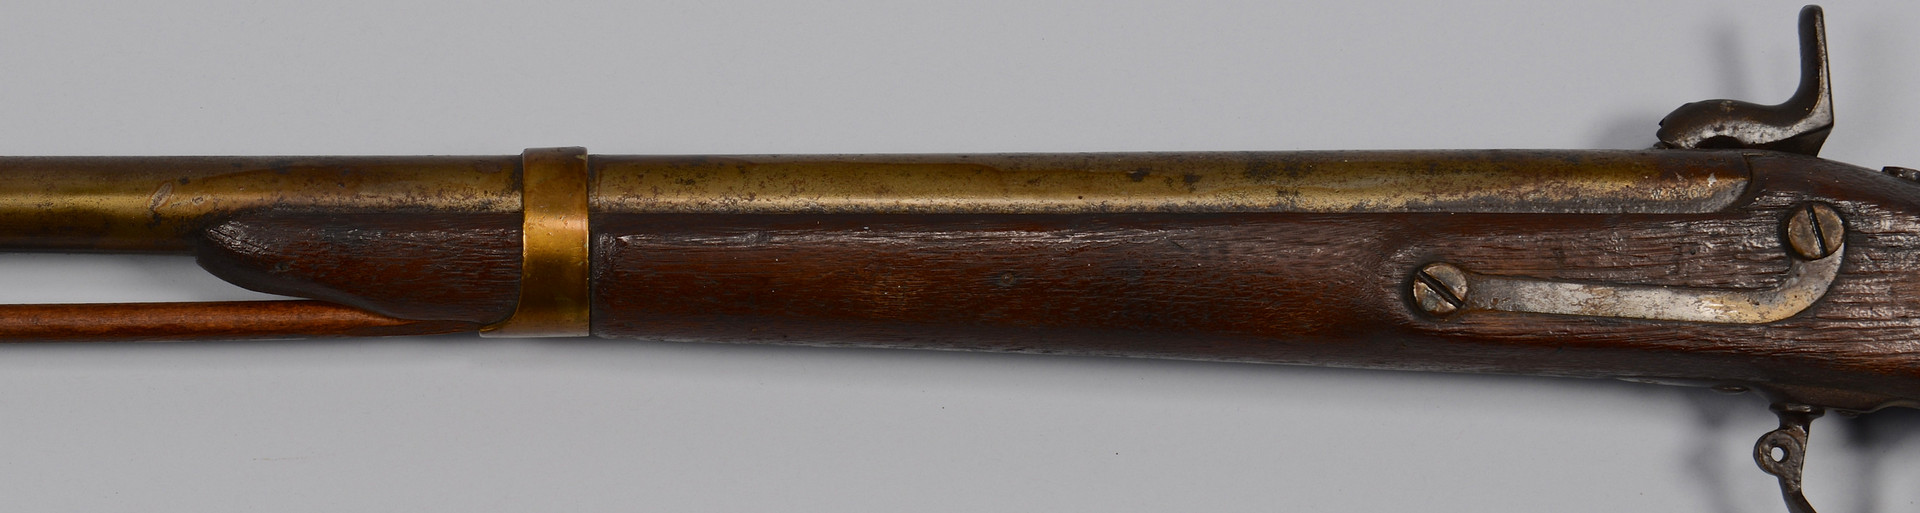 Lot 395: 1842 Model Palmetto Armory Musket, Modified